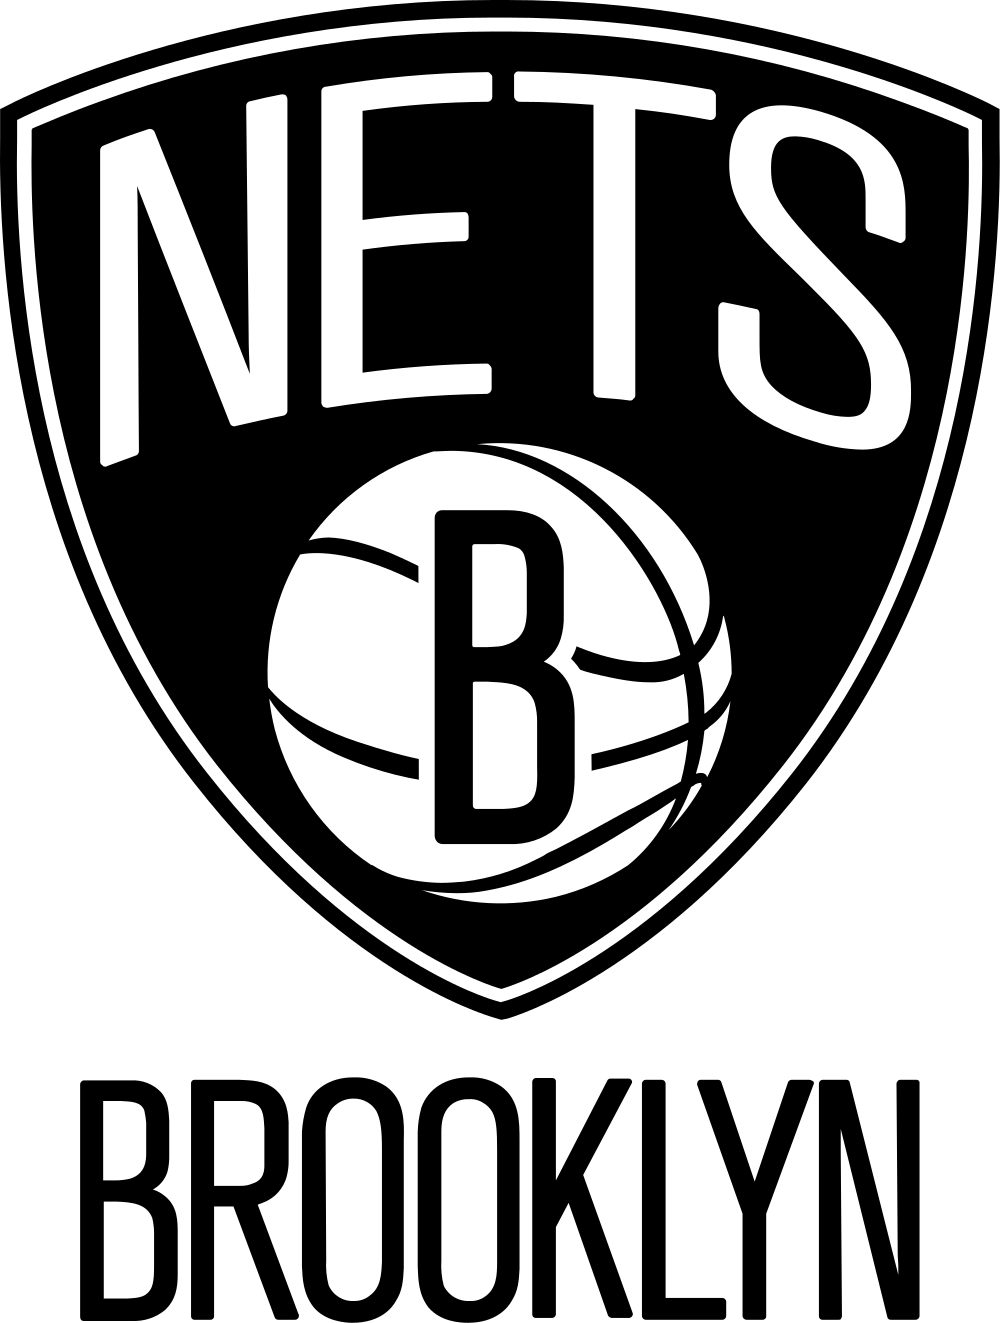 Nets Logo PNG File